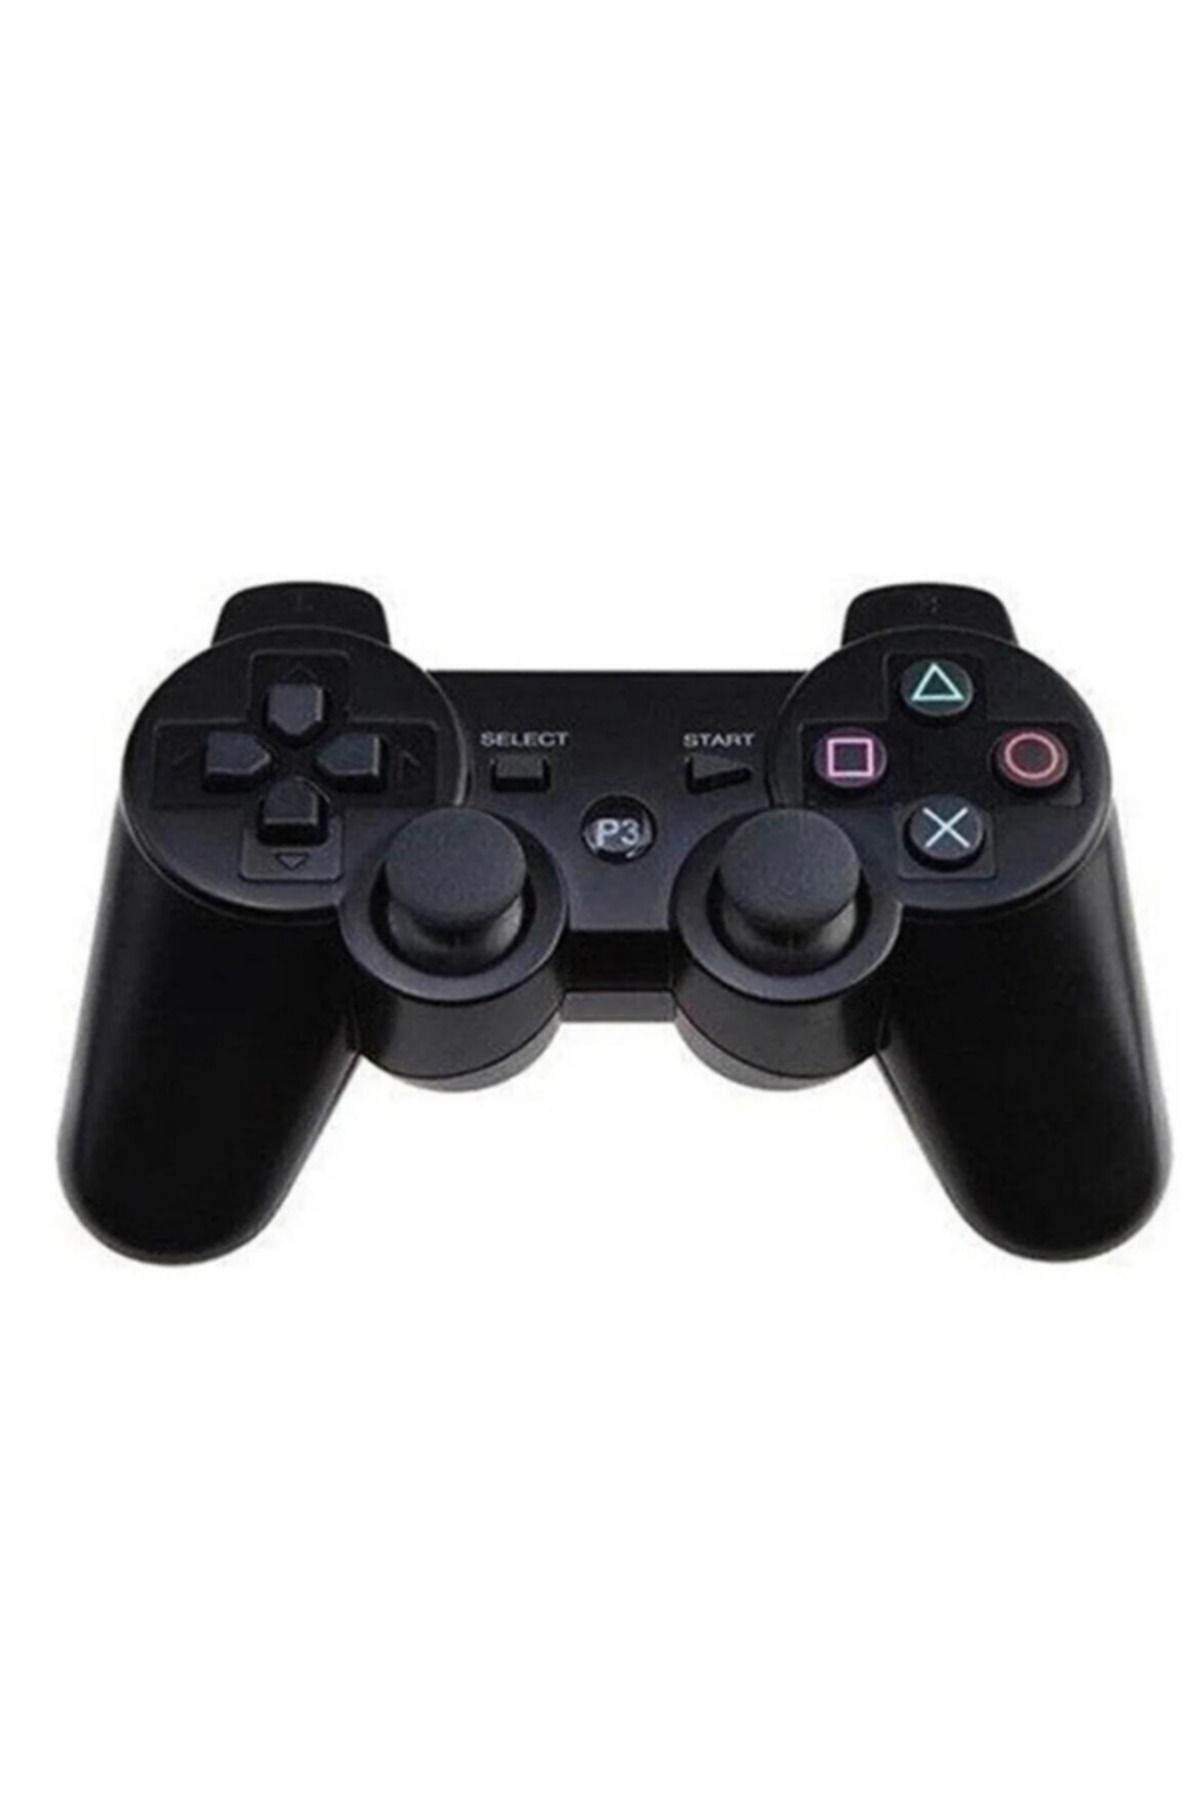 ATAsoft Ps3 Kablosuz Analog Oyun Kolu Oyuncu Konsolu Wireless Joystick Controller Double Gamepad Uyumlu